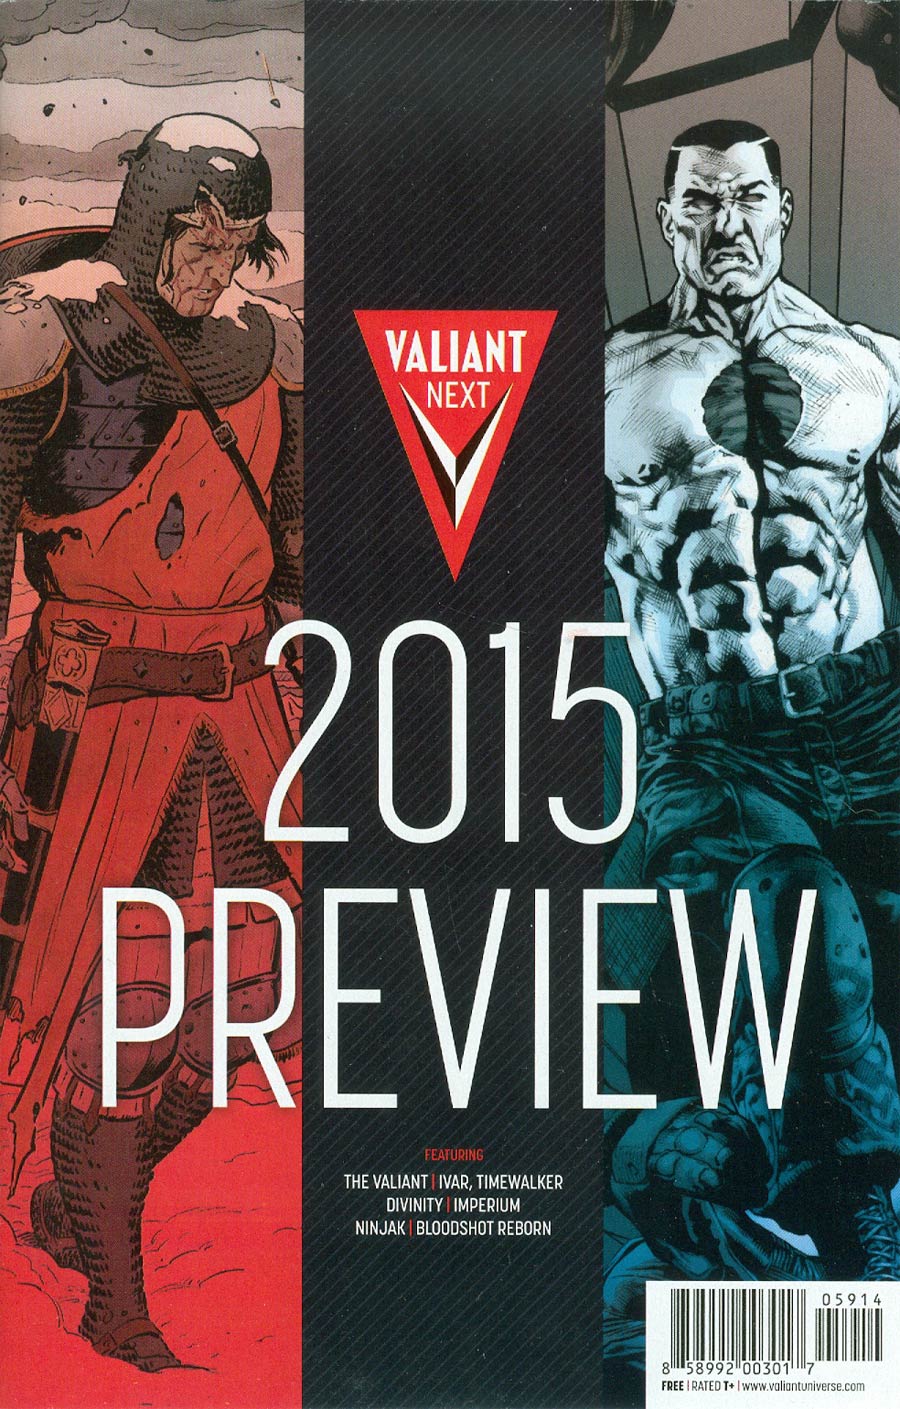 Valiant Next 2015 Preview